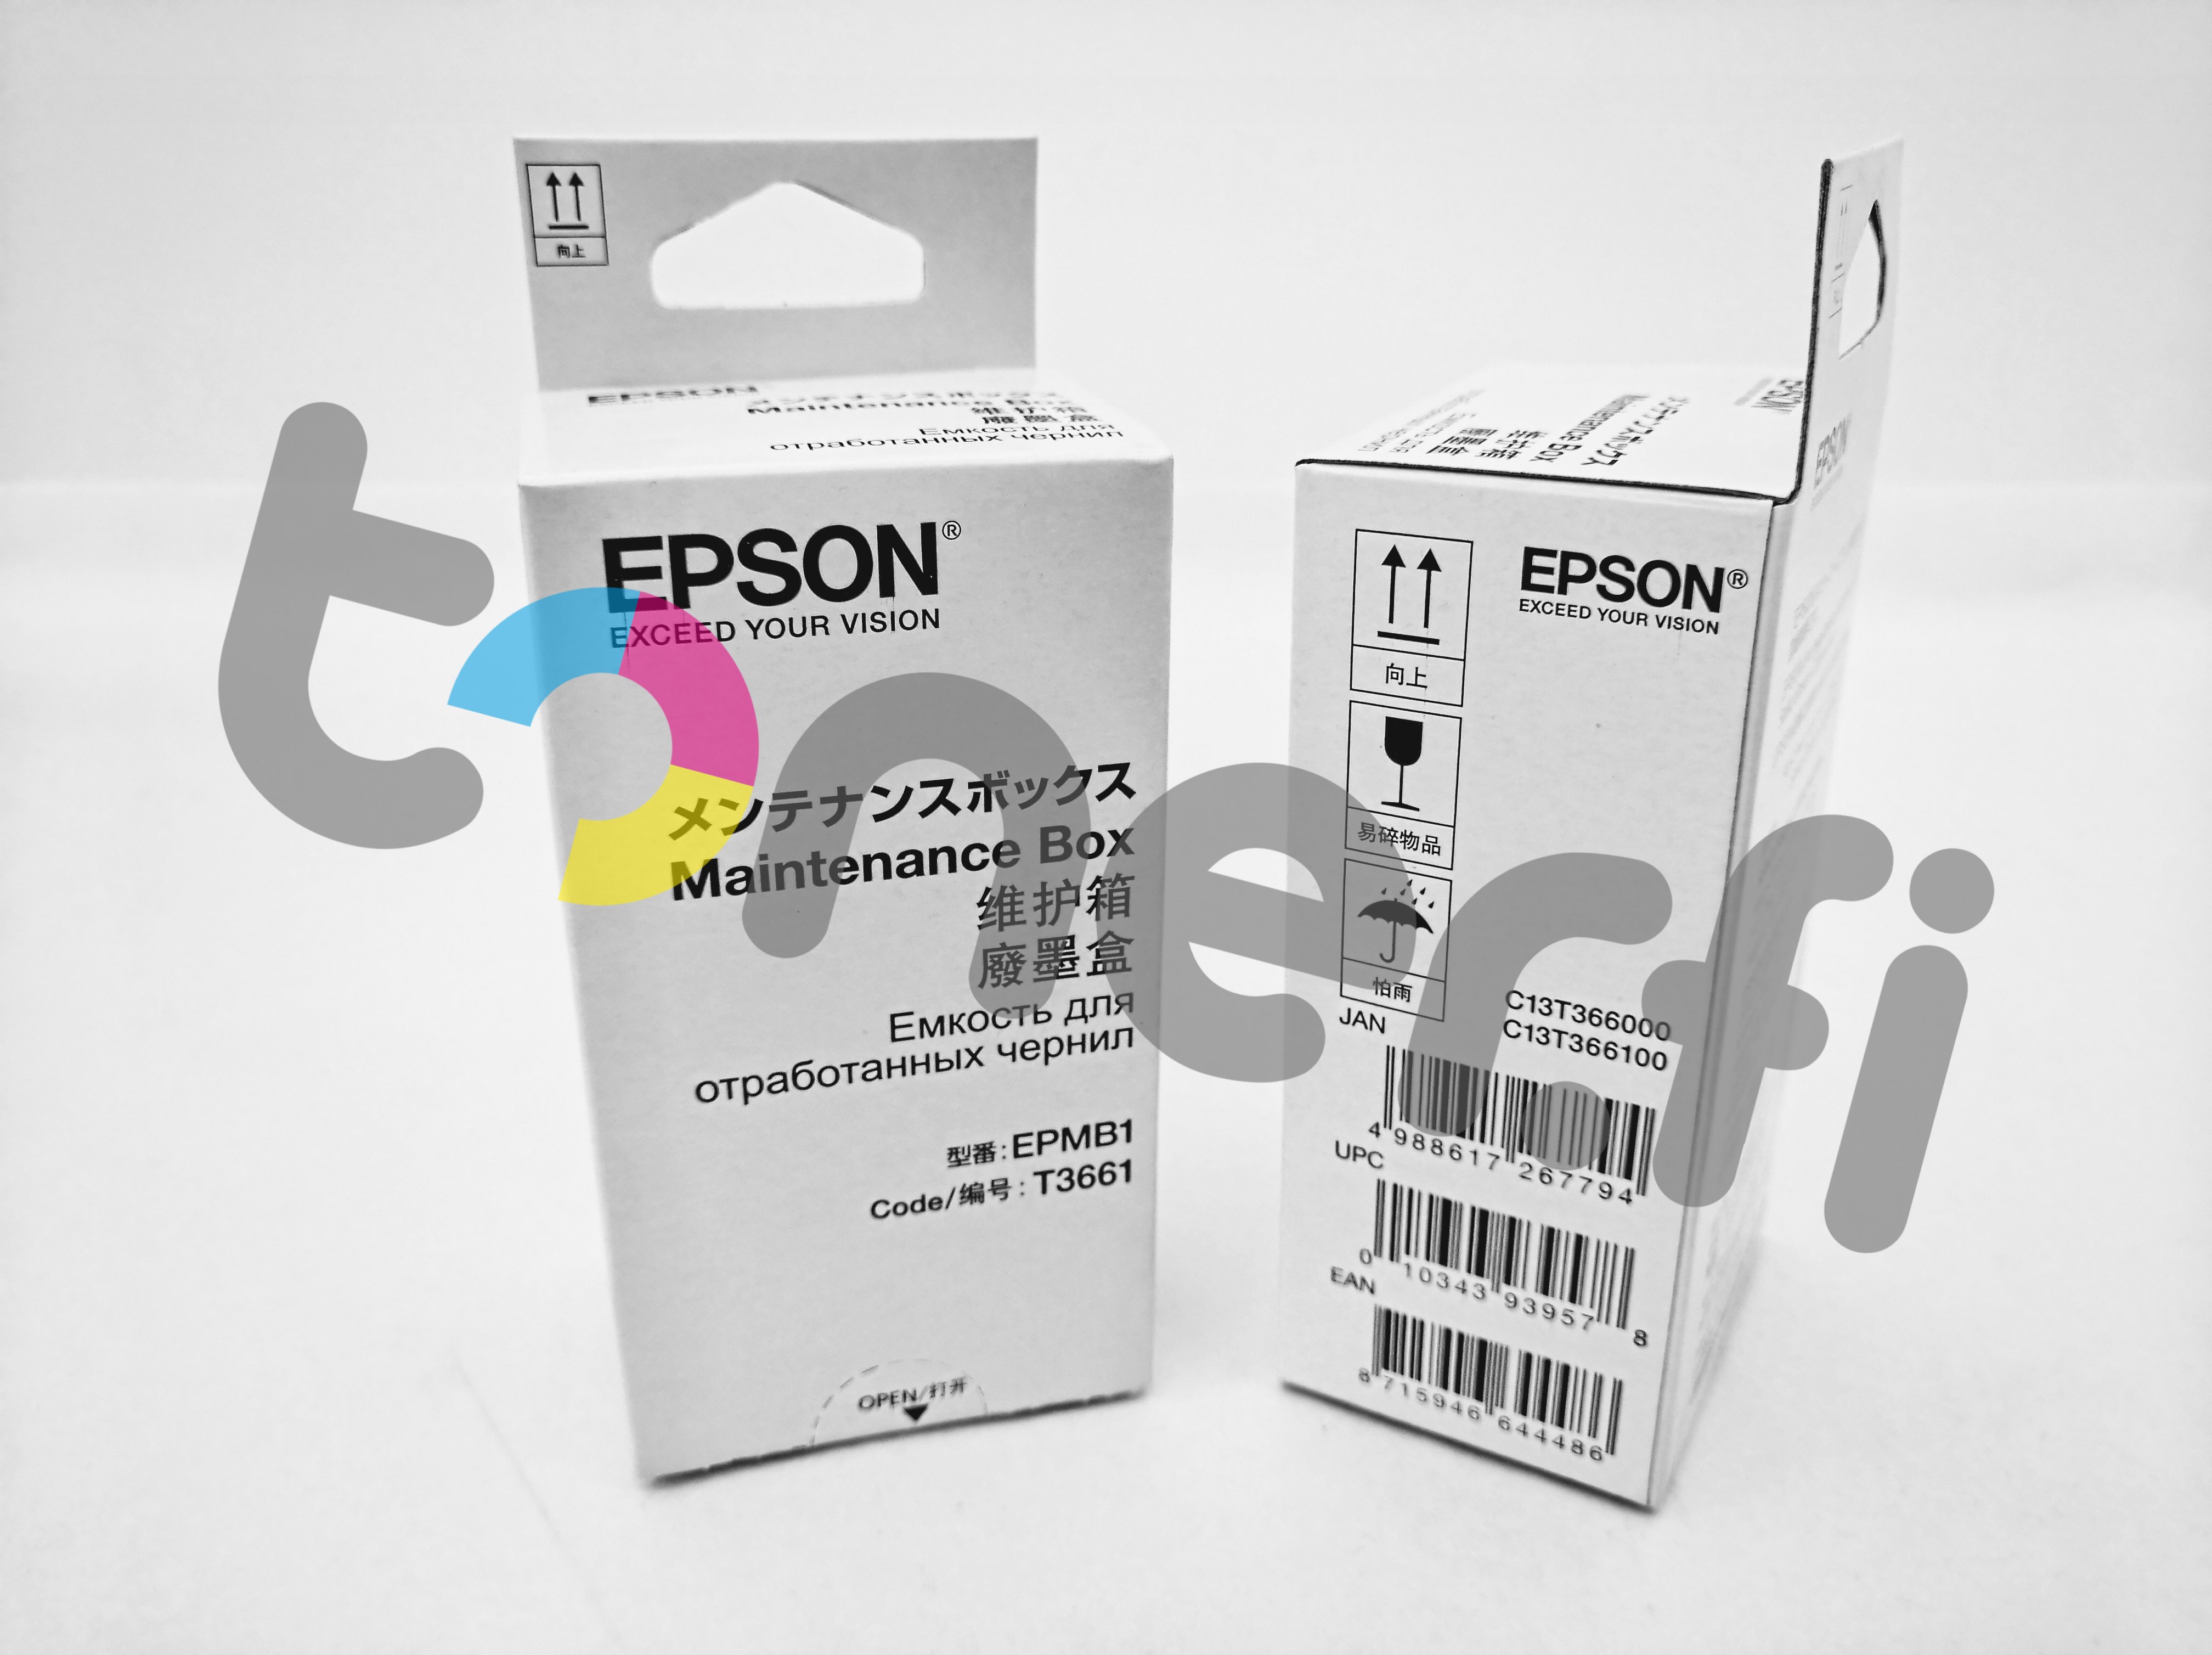 Epson C13T366100 Maintenance Box